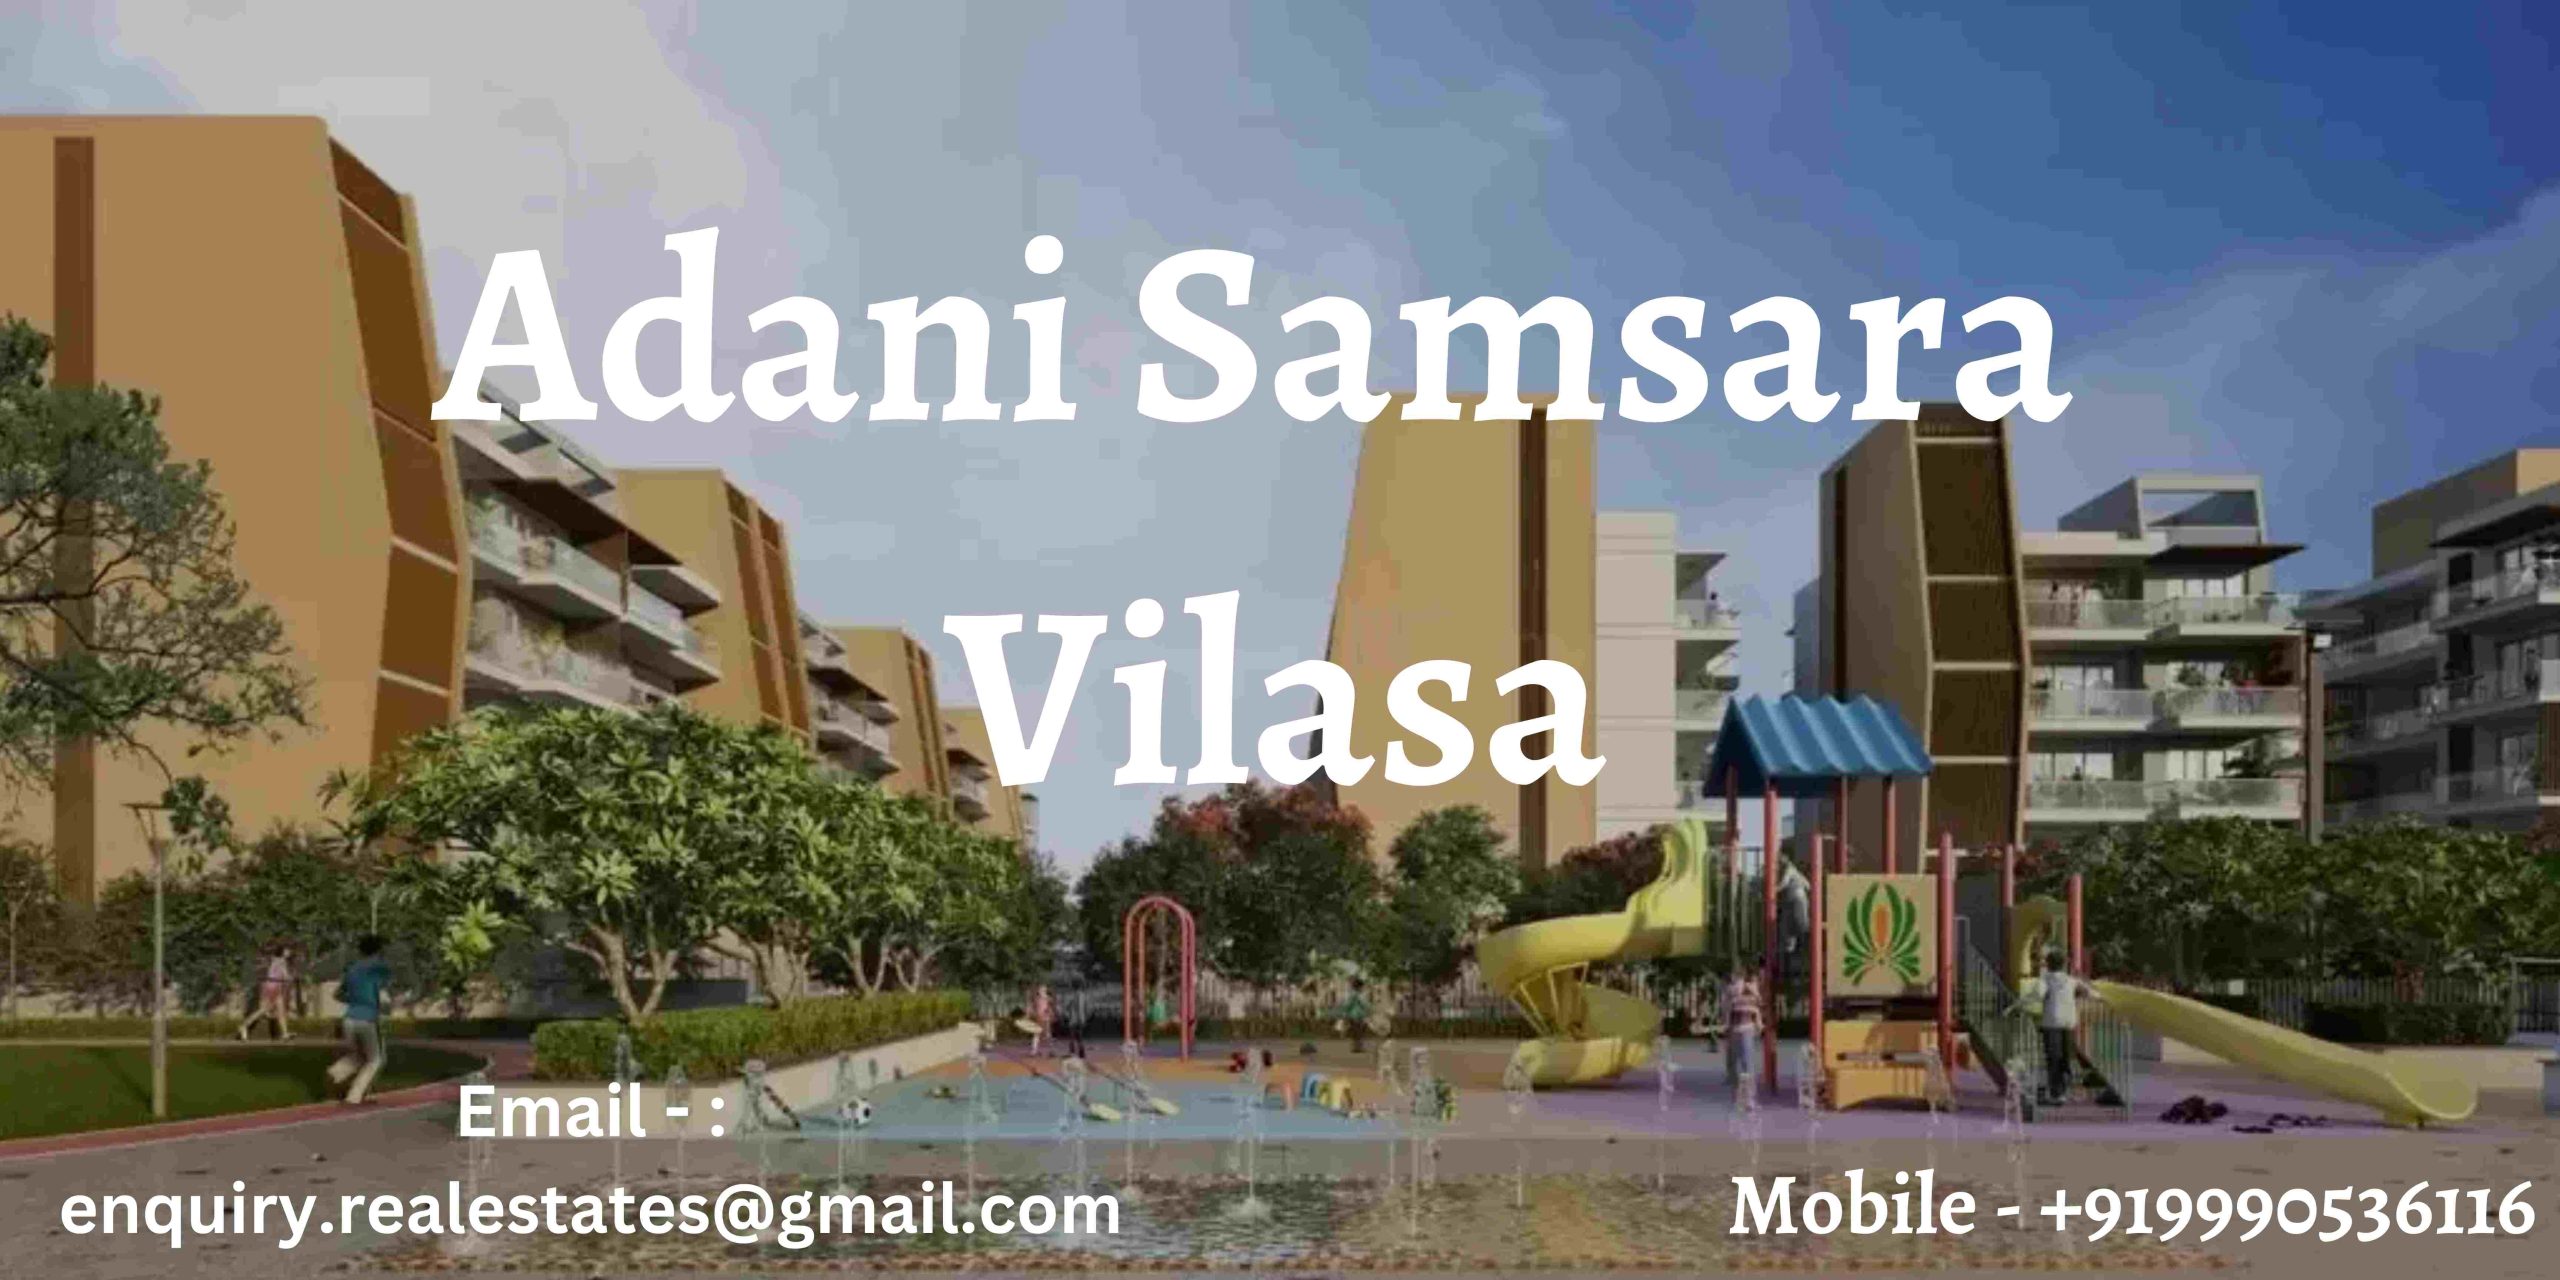 Why Adani Samsara Vilasa is the Ultimate Destination for Luxury Living